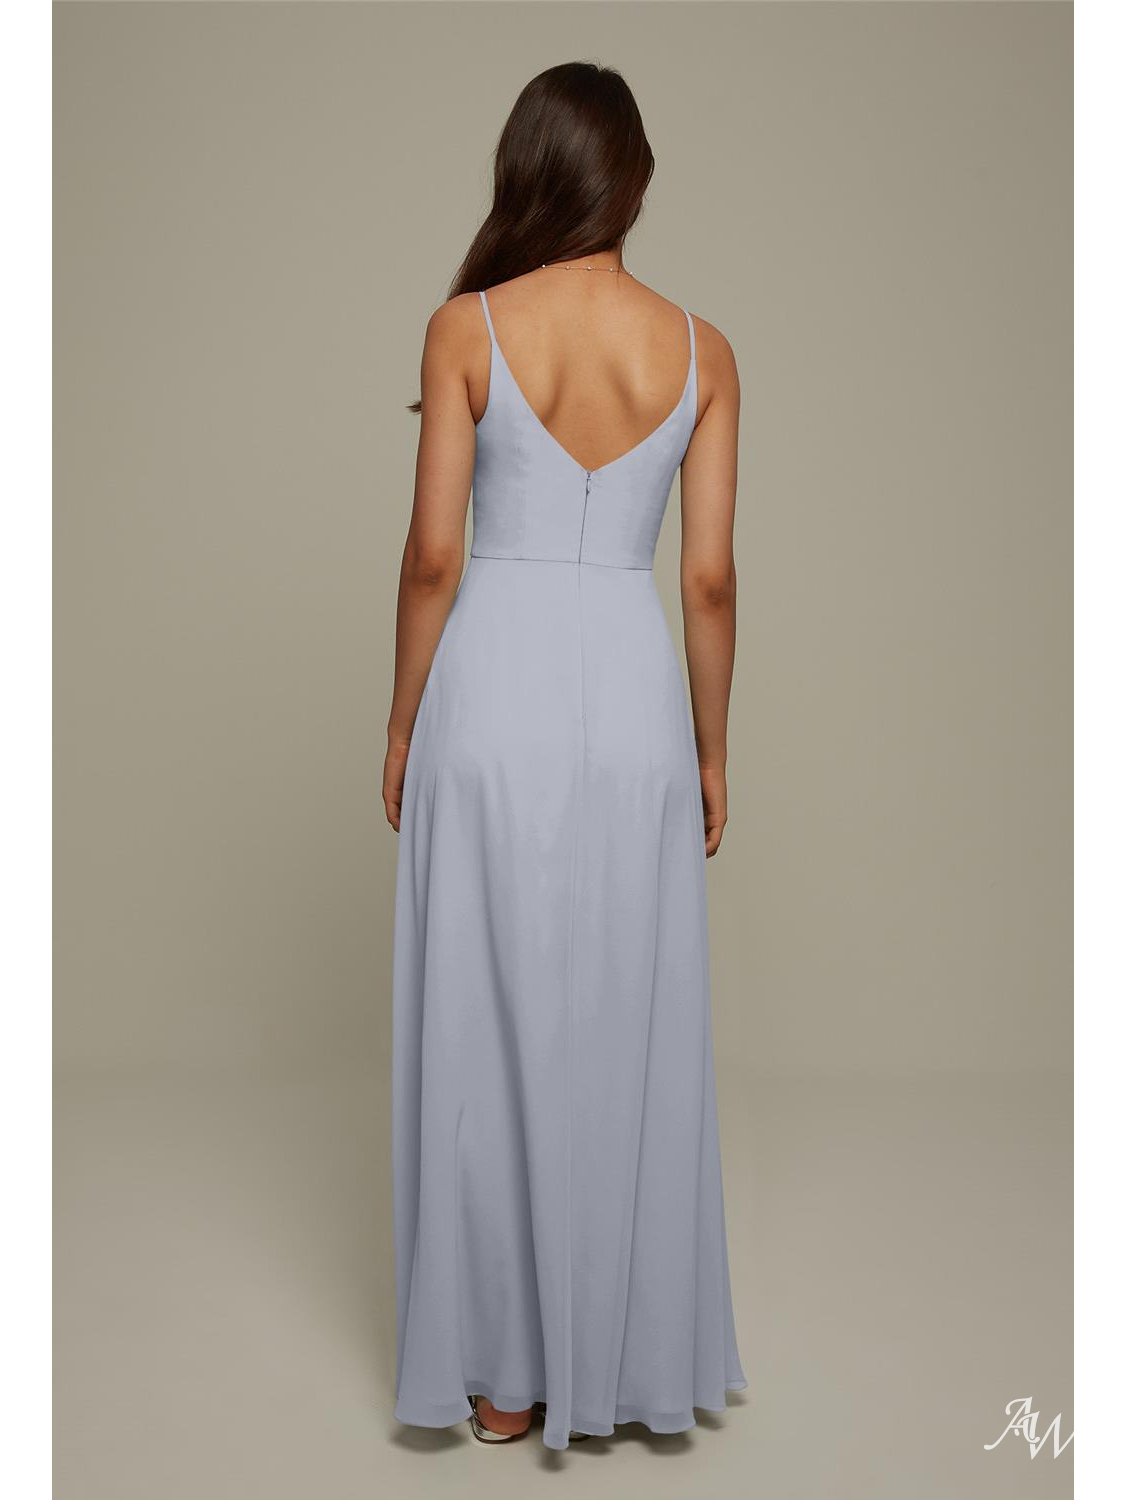 AW Bertha Dress, Lilac Long Bridesmaid Dresses, 99.99 - A.W. Bridal